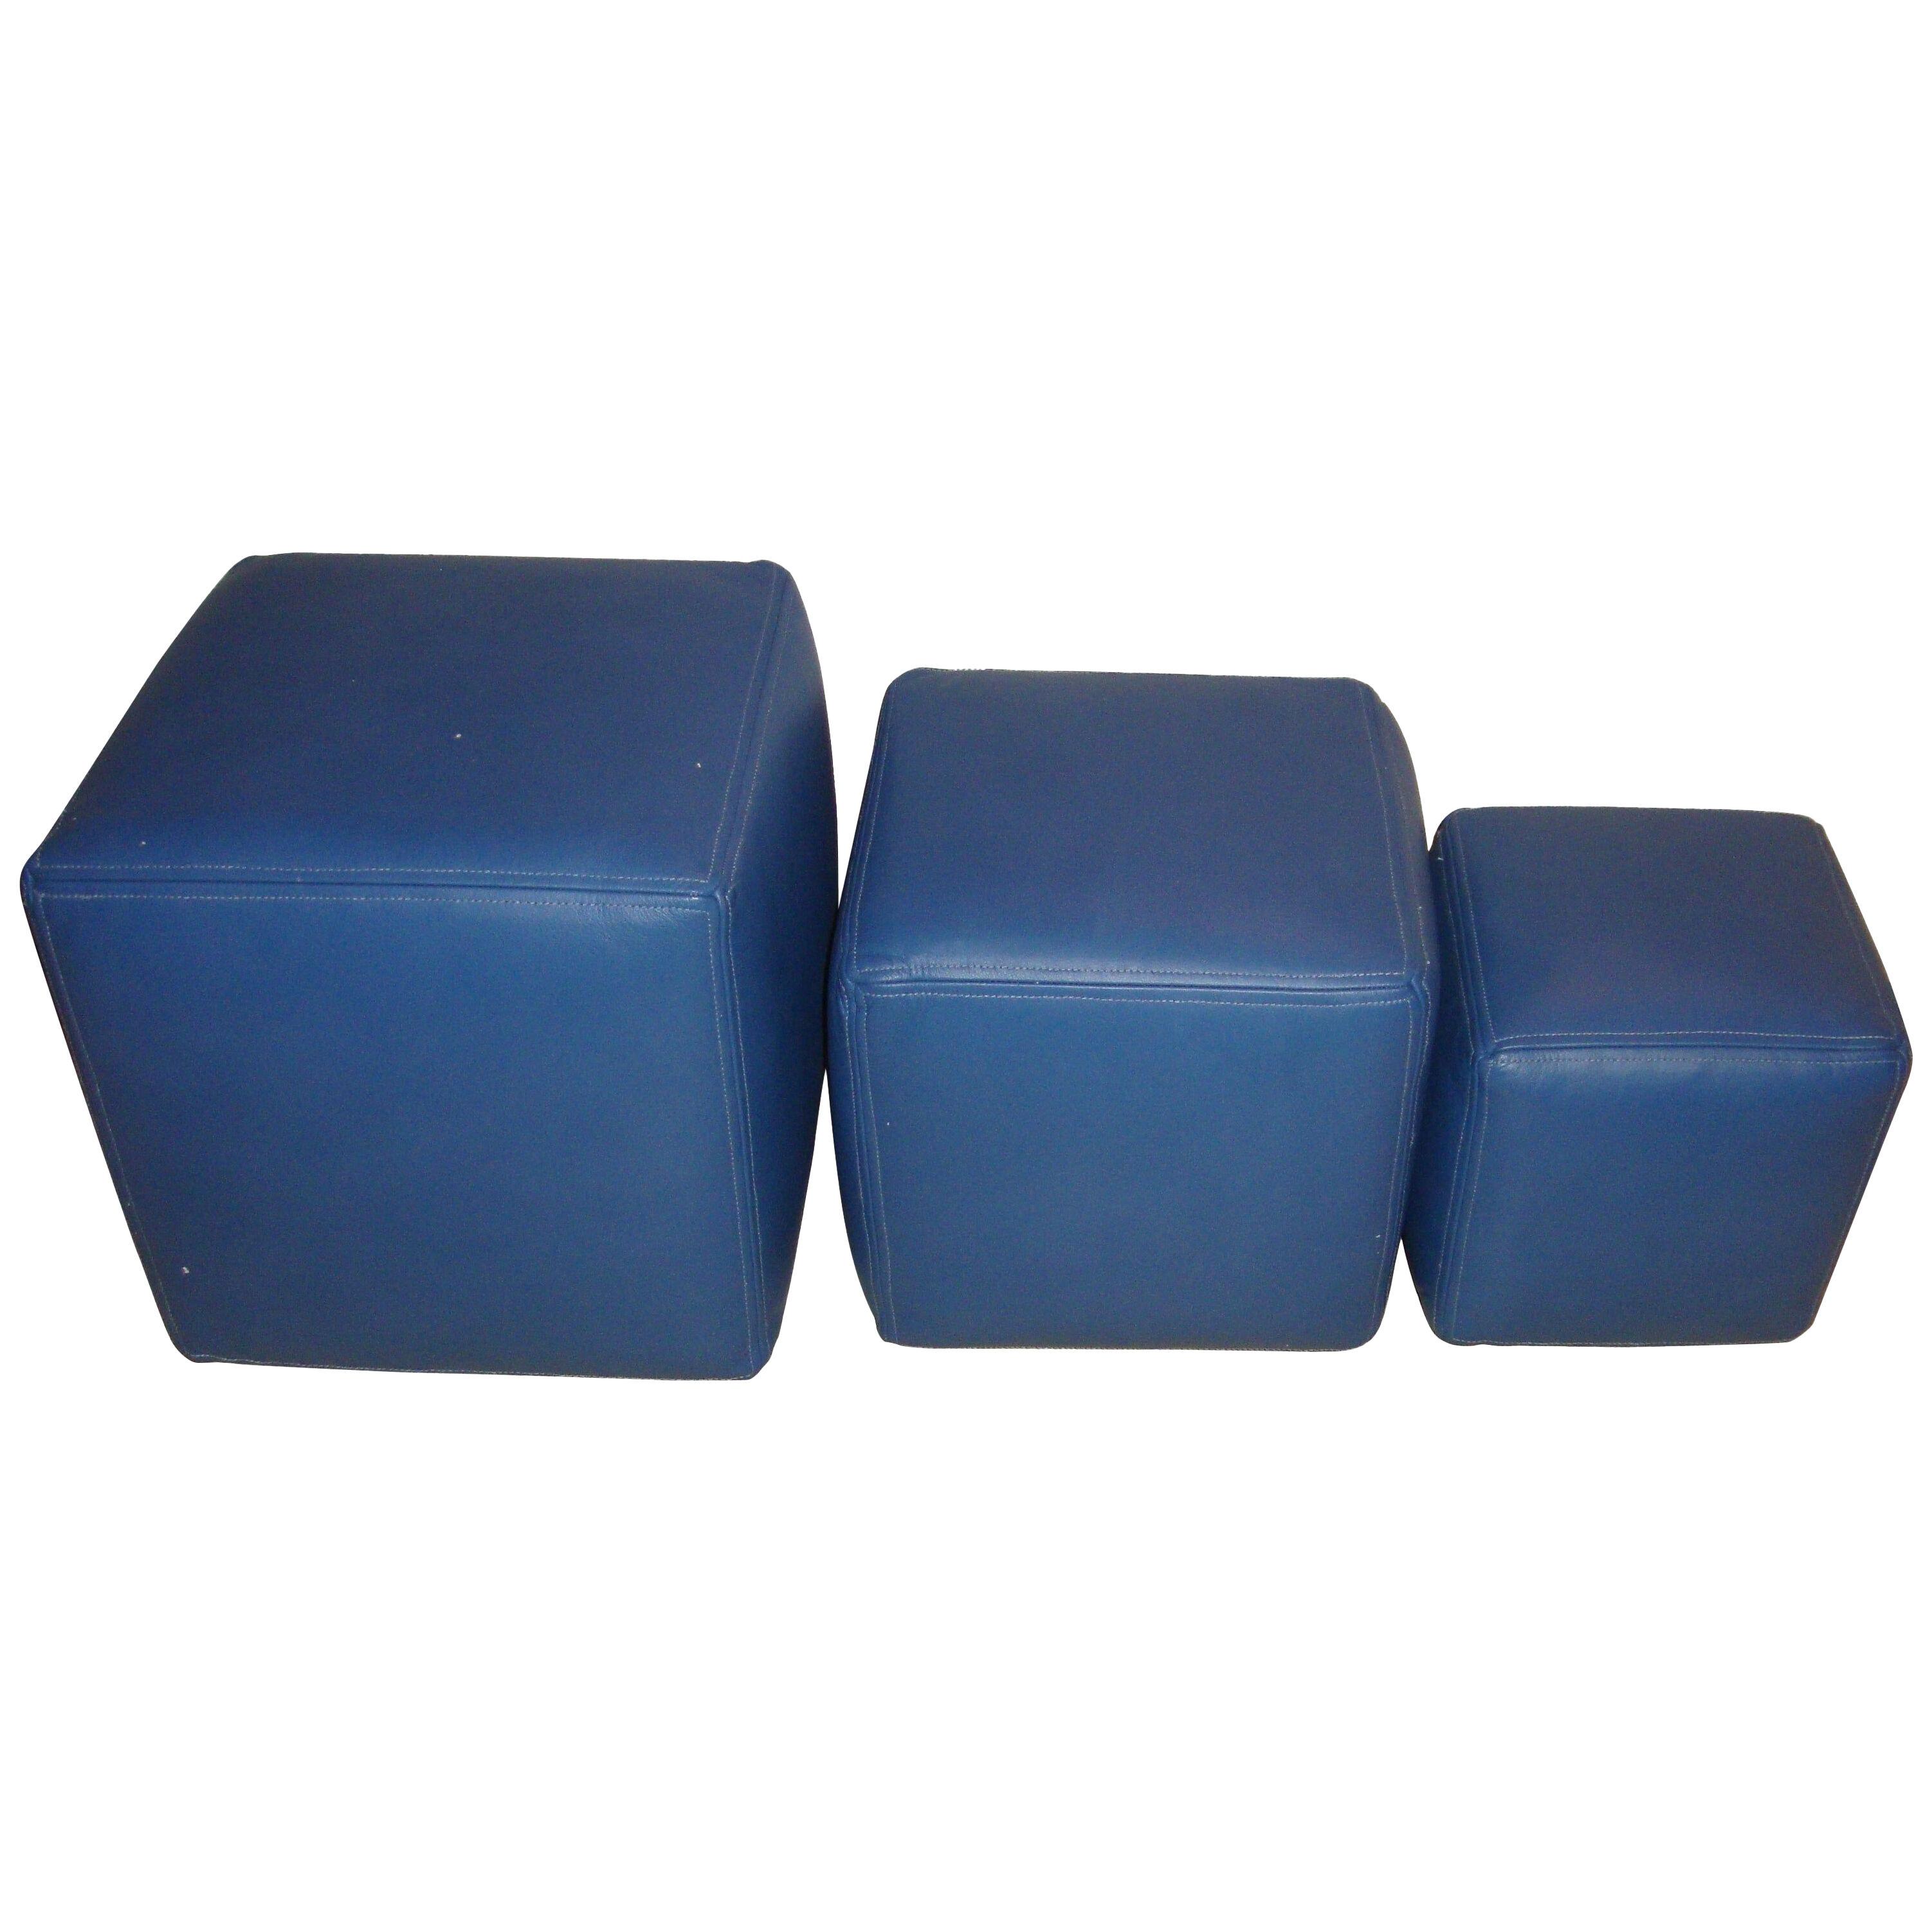 Dakota Jackson Group of Three Leather Cubes- Seats